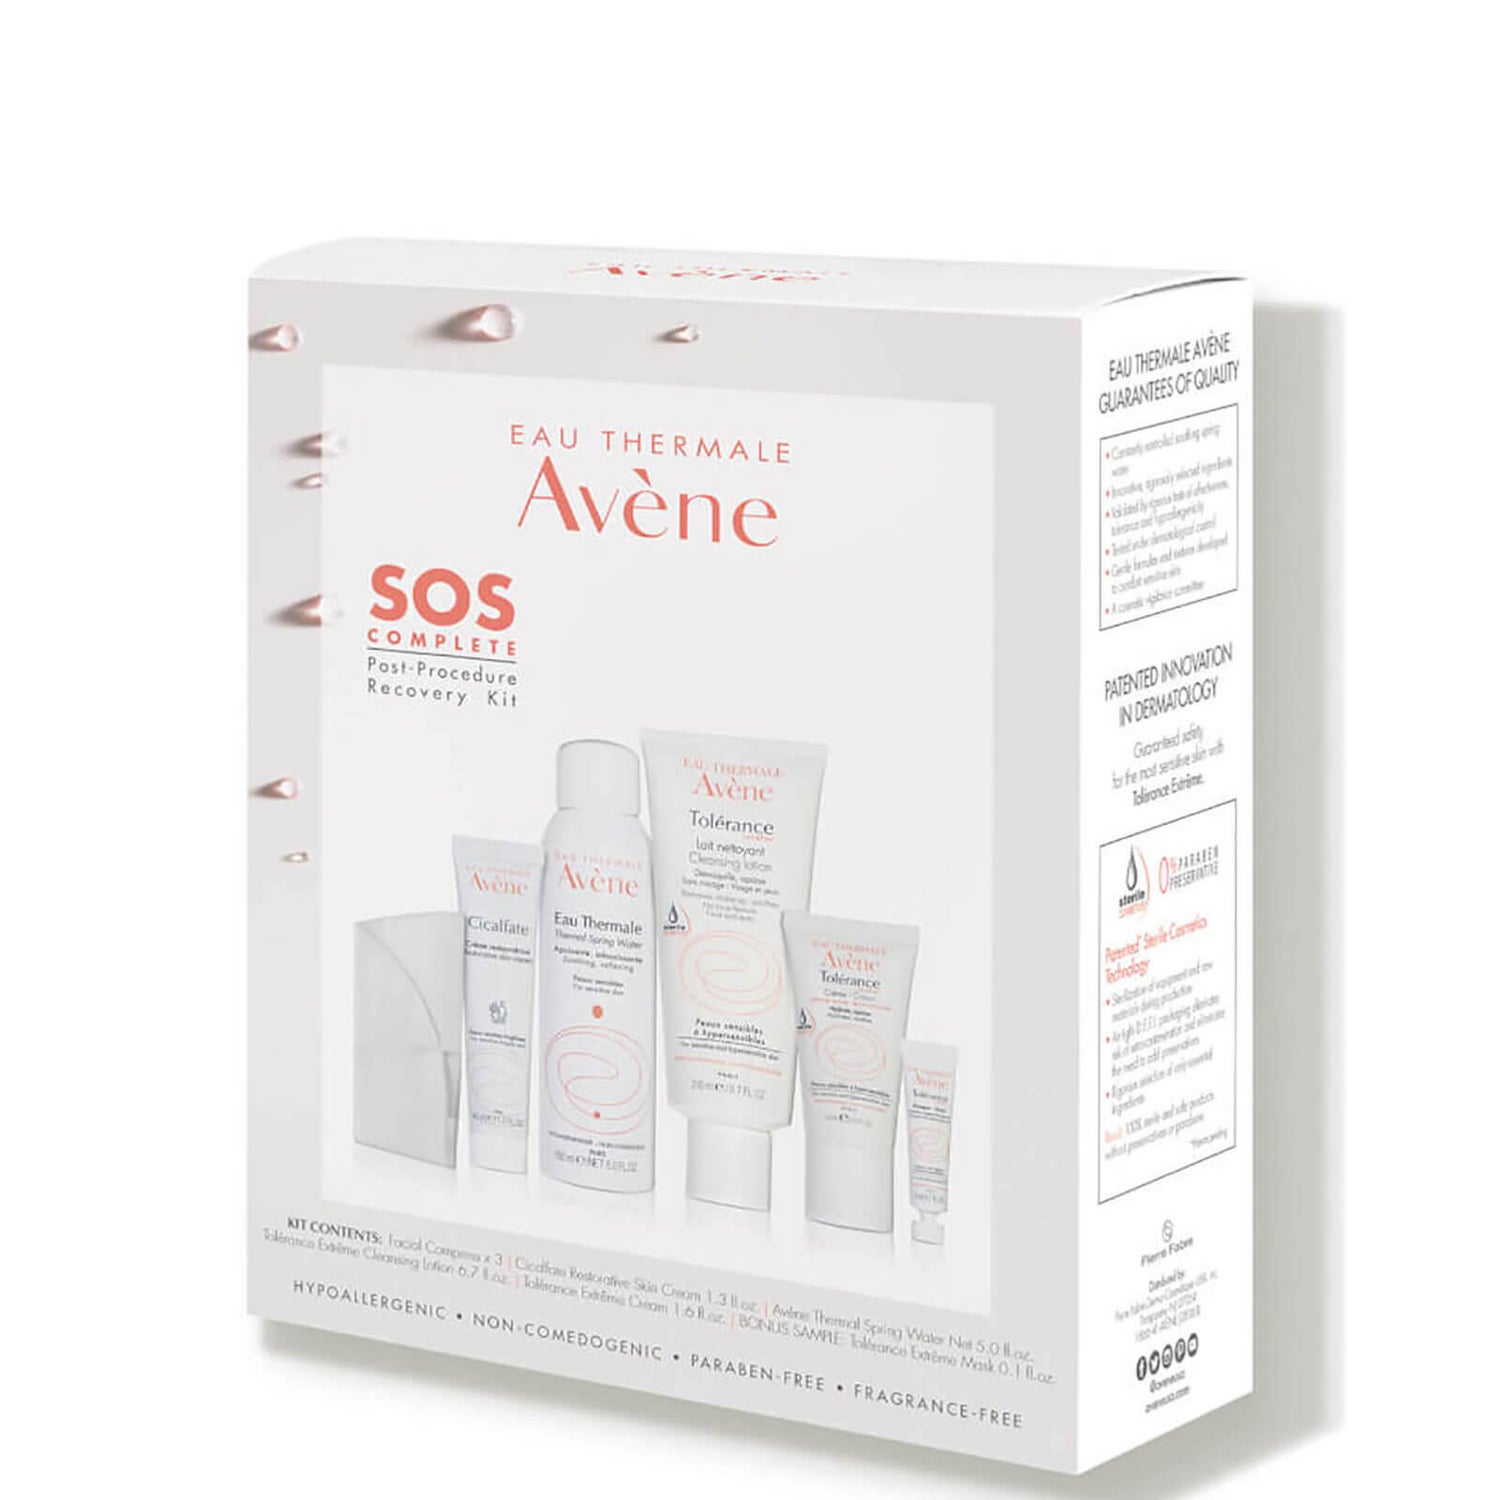 Avene SOS COMPLETE Post-Procedure Recovery Kit (5 piece - $118 Value)